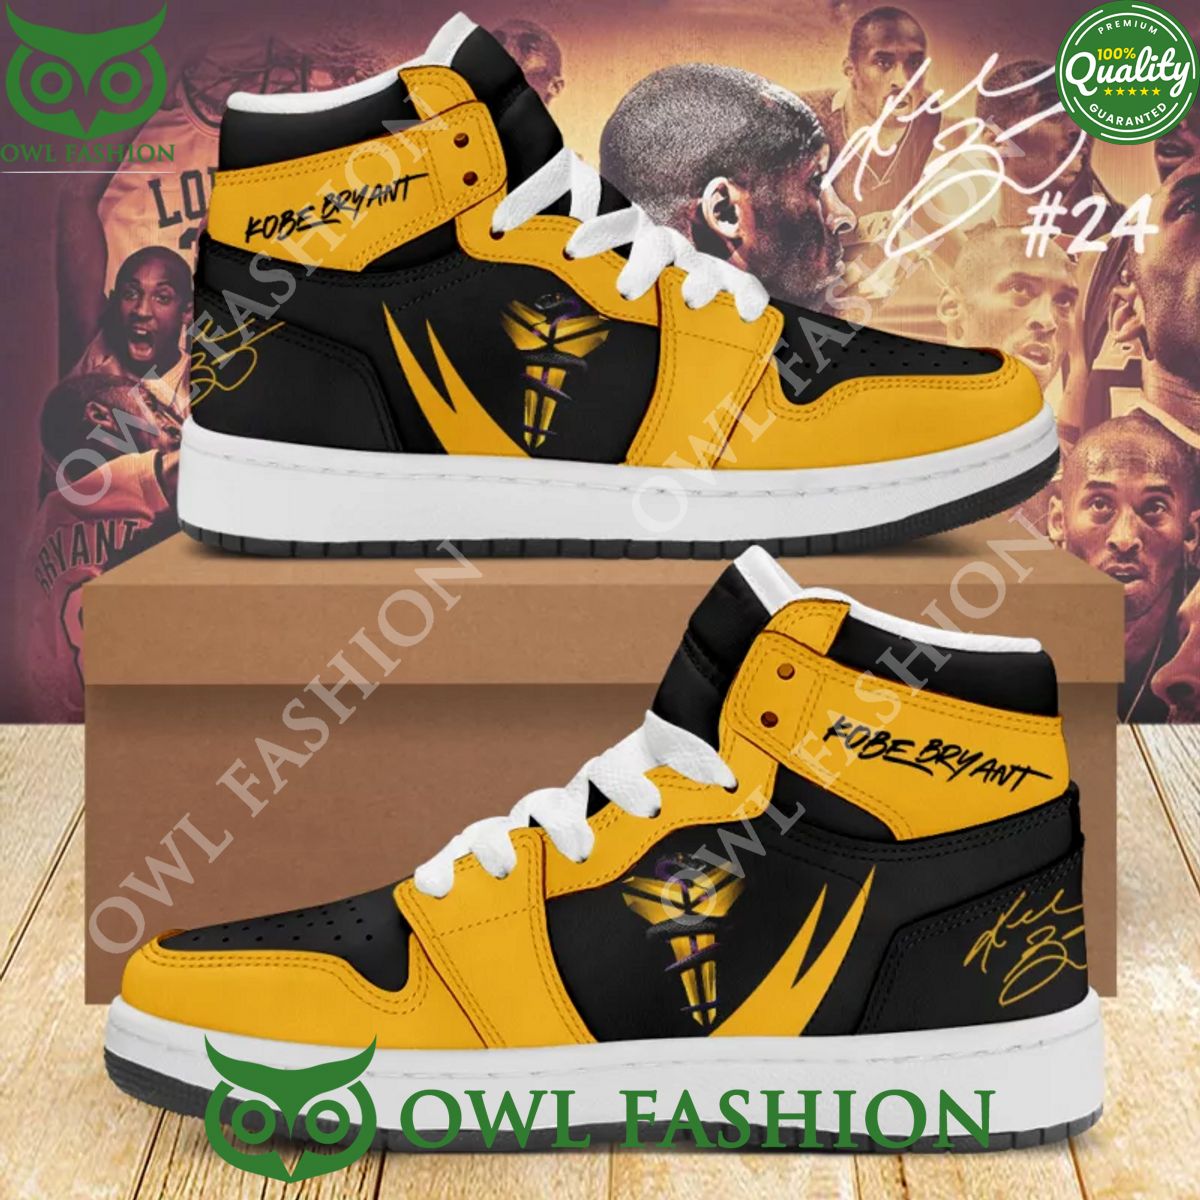 Los Angeles Lakers NBA Kobe Bryant Black Yellow Signature AJ1 High top Air Jordan Shoes